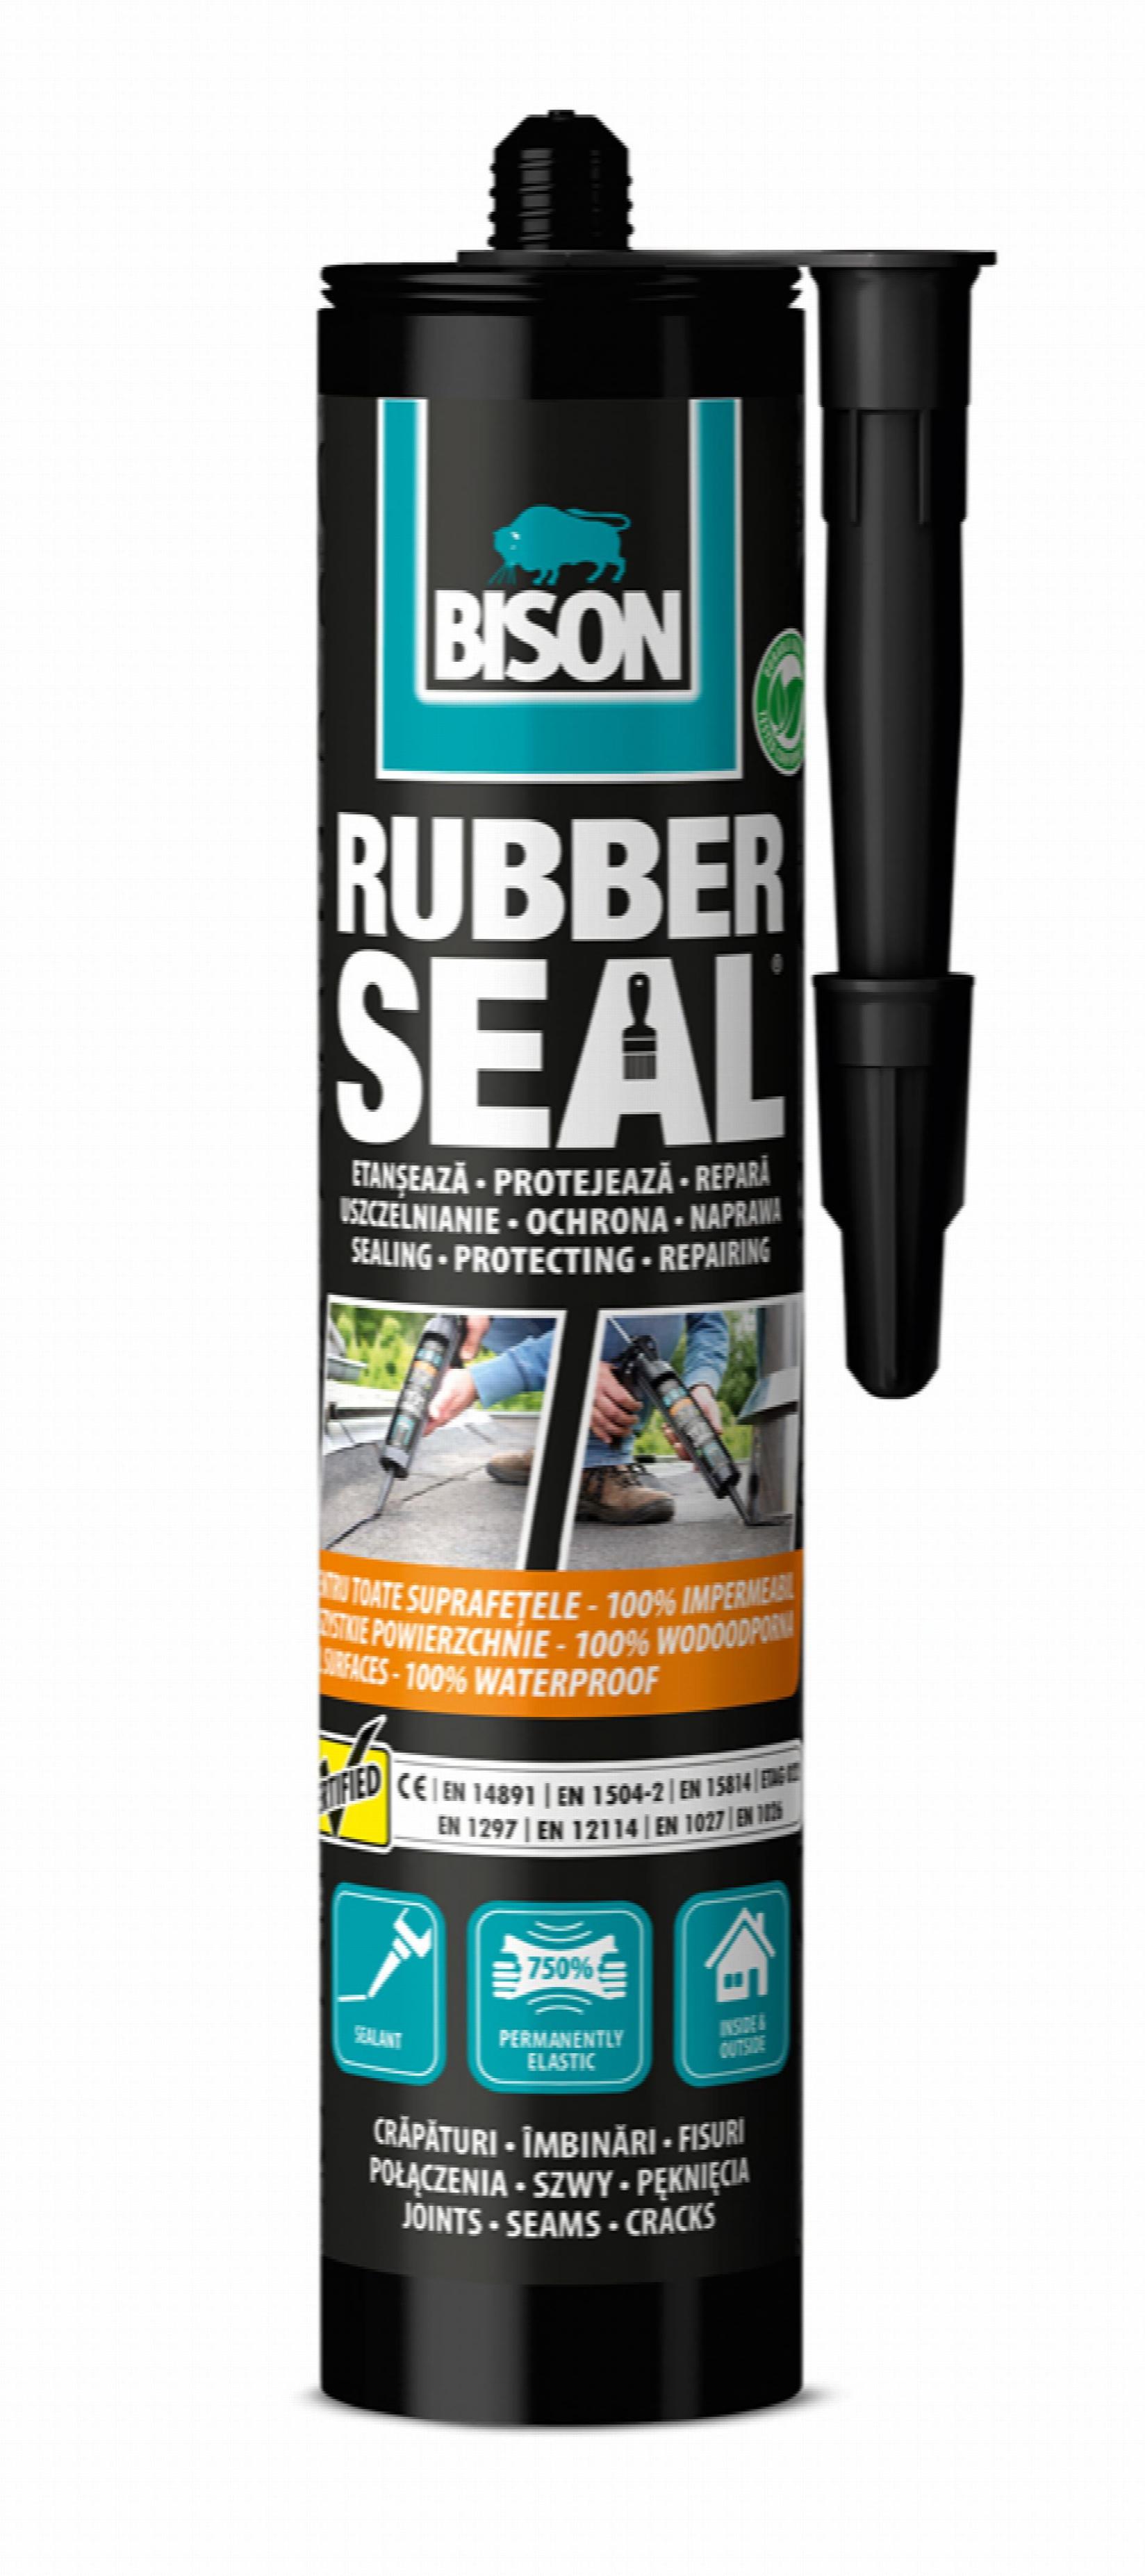 BISON Rubber Seal Cartridge 310G 268774